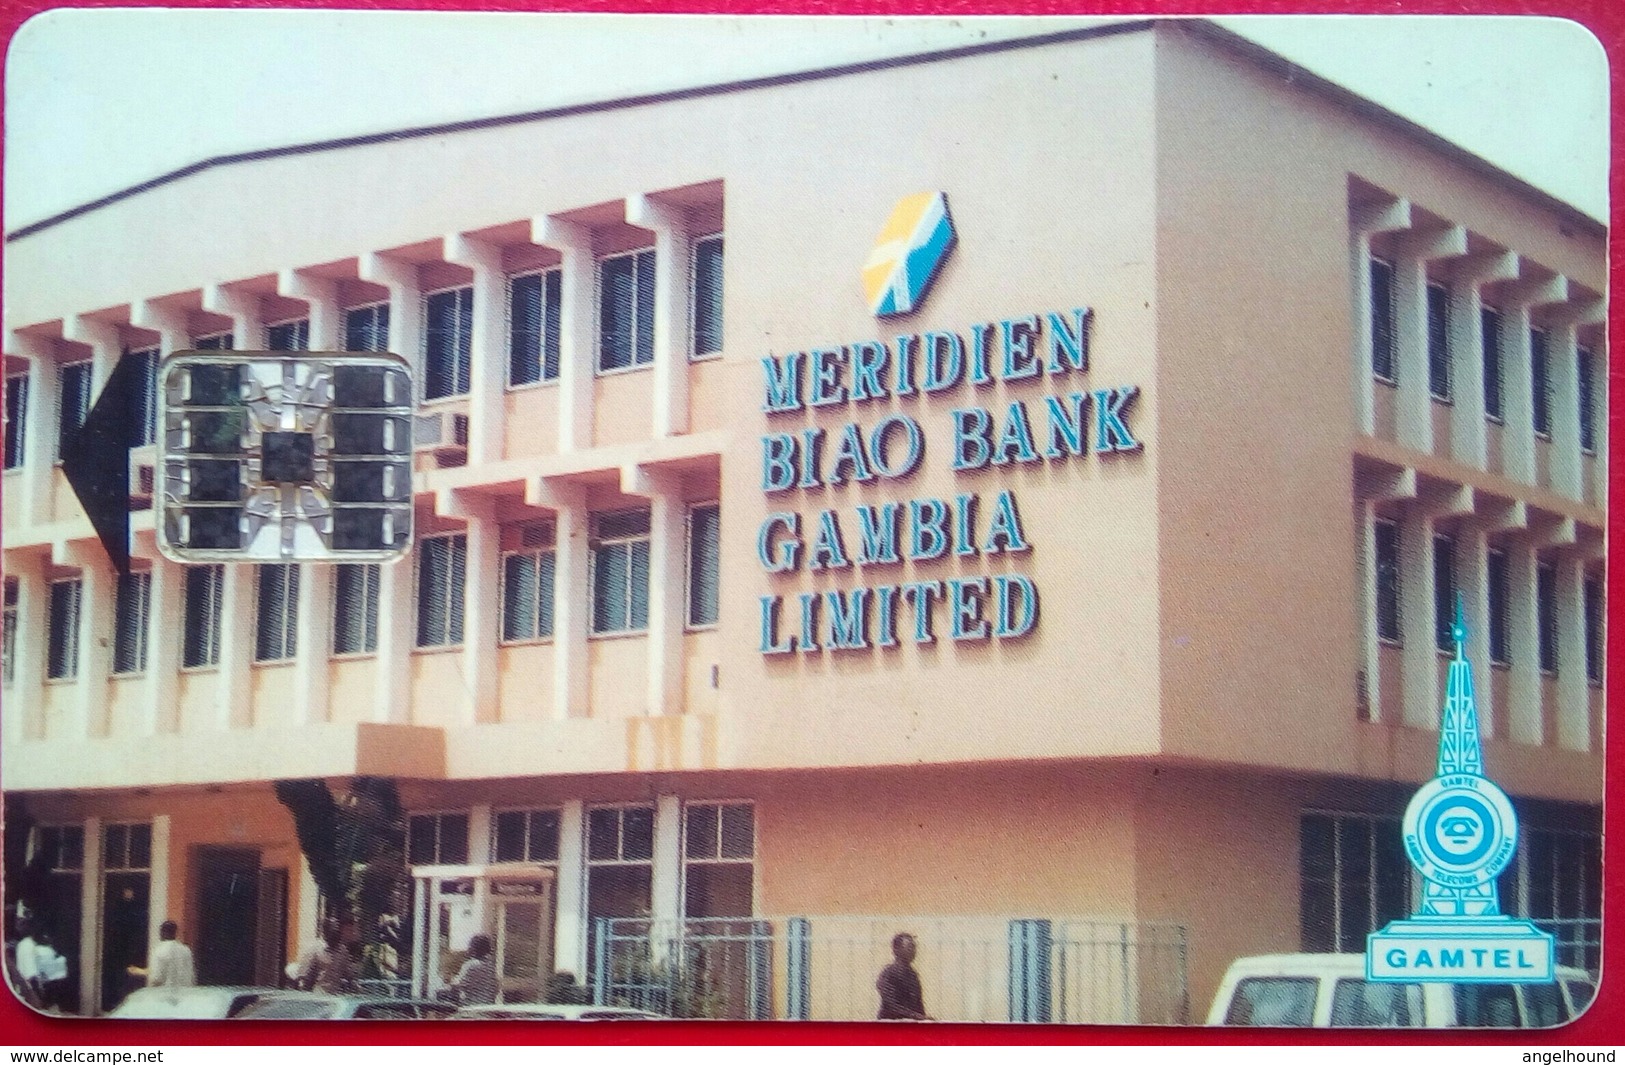 Meridien Bank 60 Units Merry Christmas - Gambia